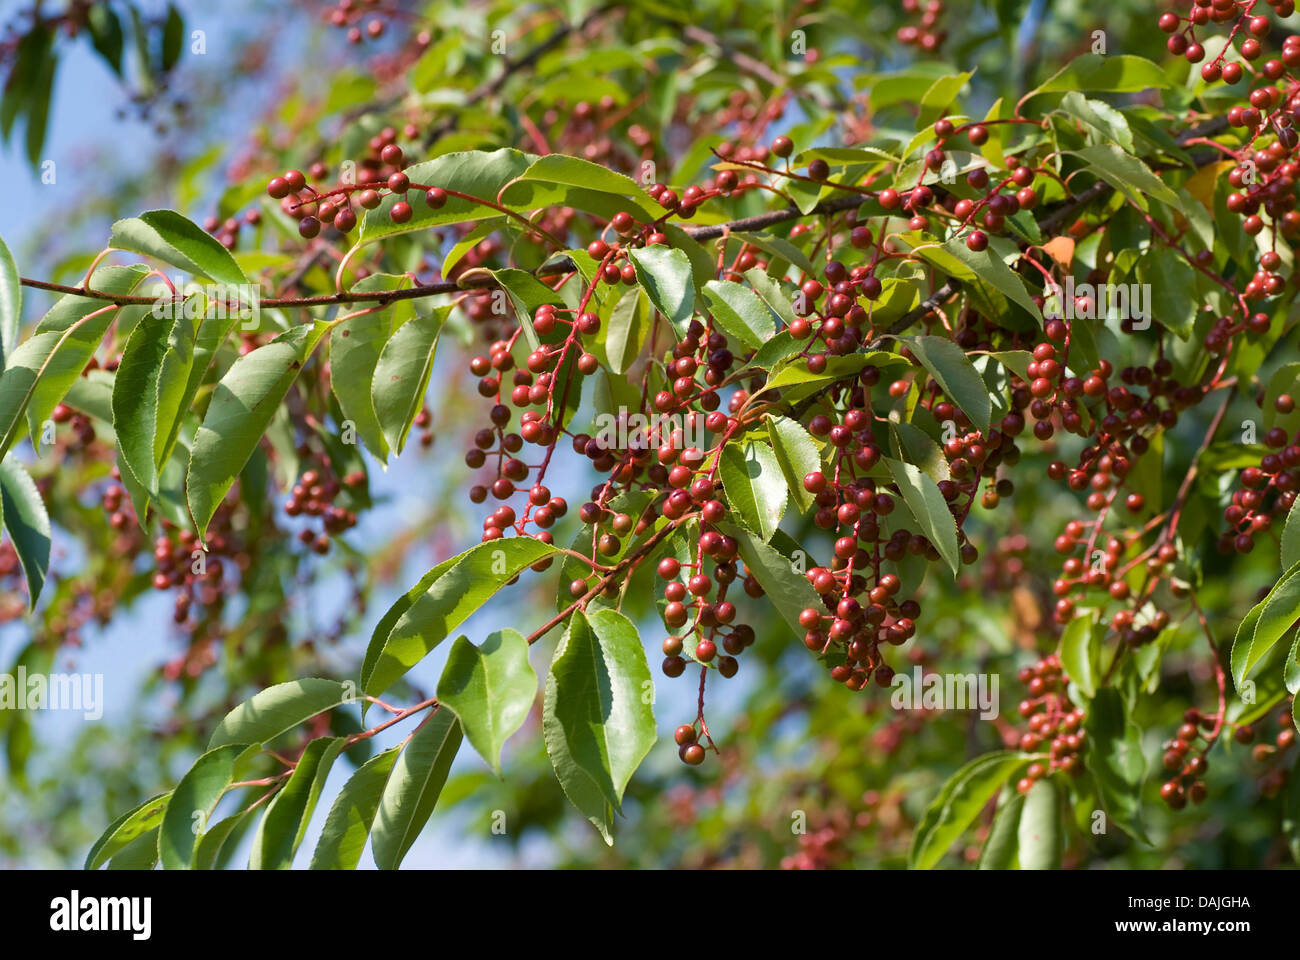 Wild Black cherry (Prunus serotina), les branches avec les fruits immatures, Allemagne Banque D'Images